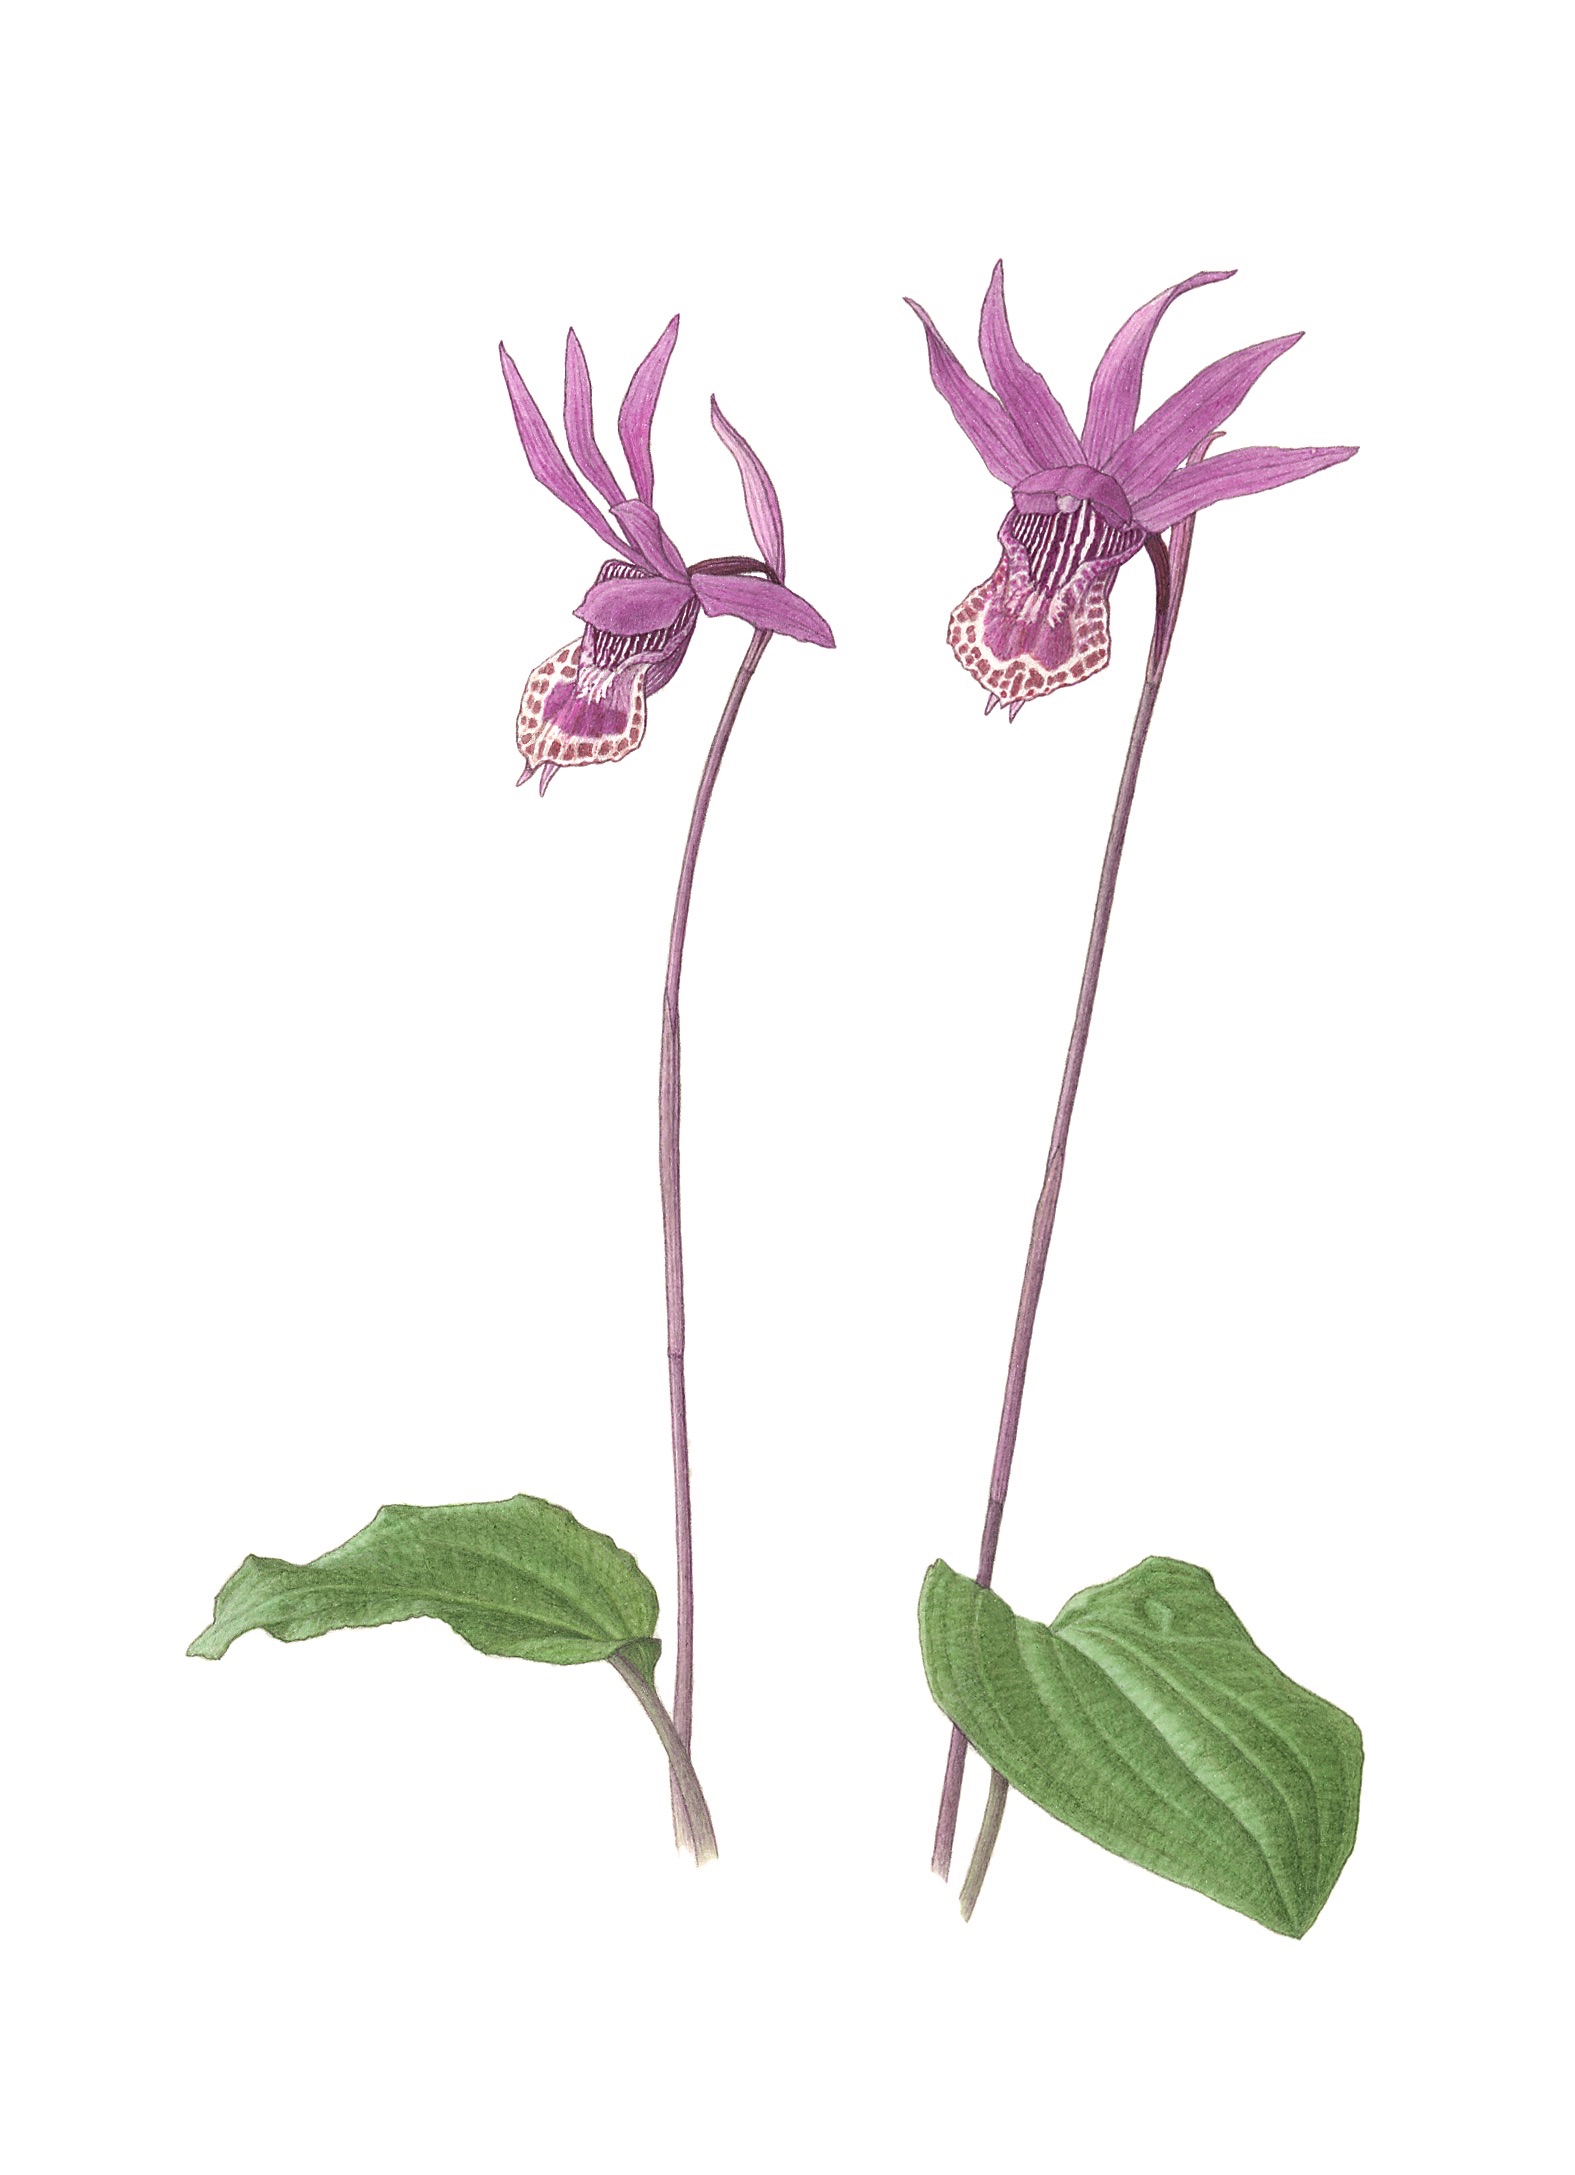 Fairy Slipper Orchid ~ Calypso bulbosa